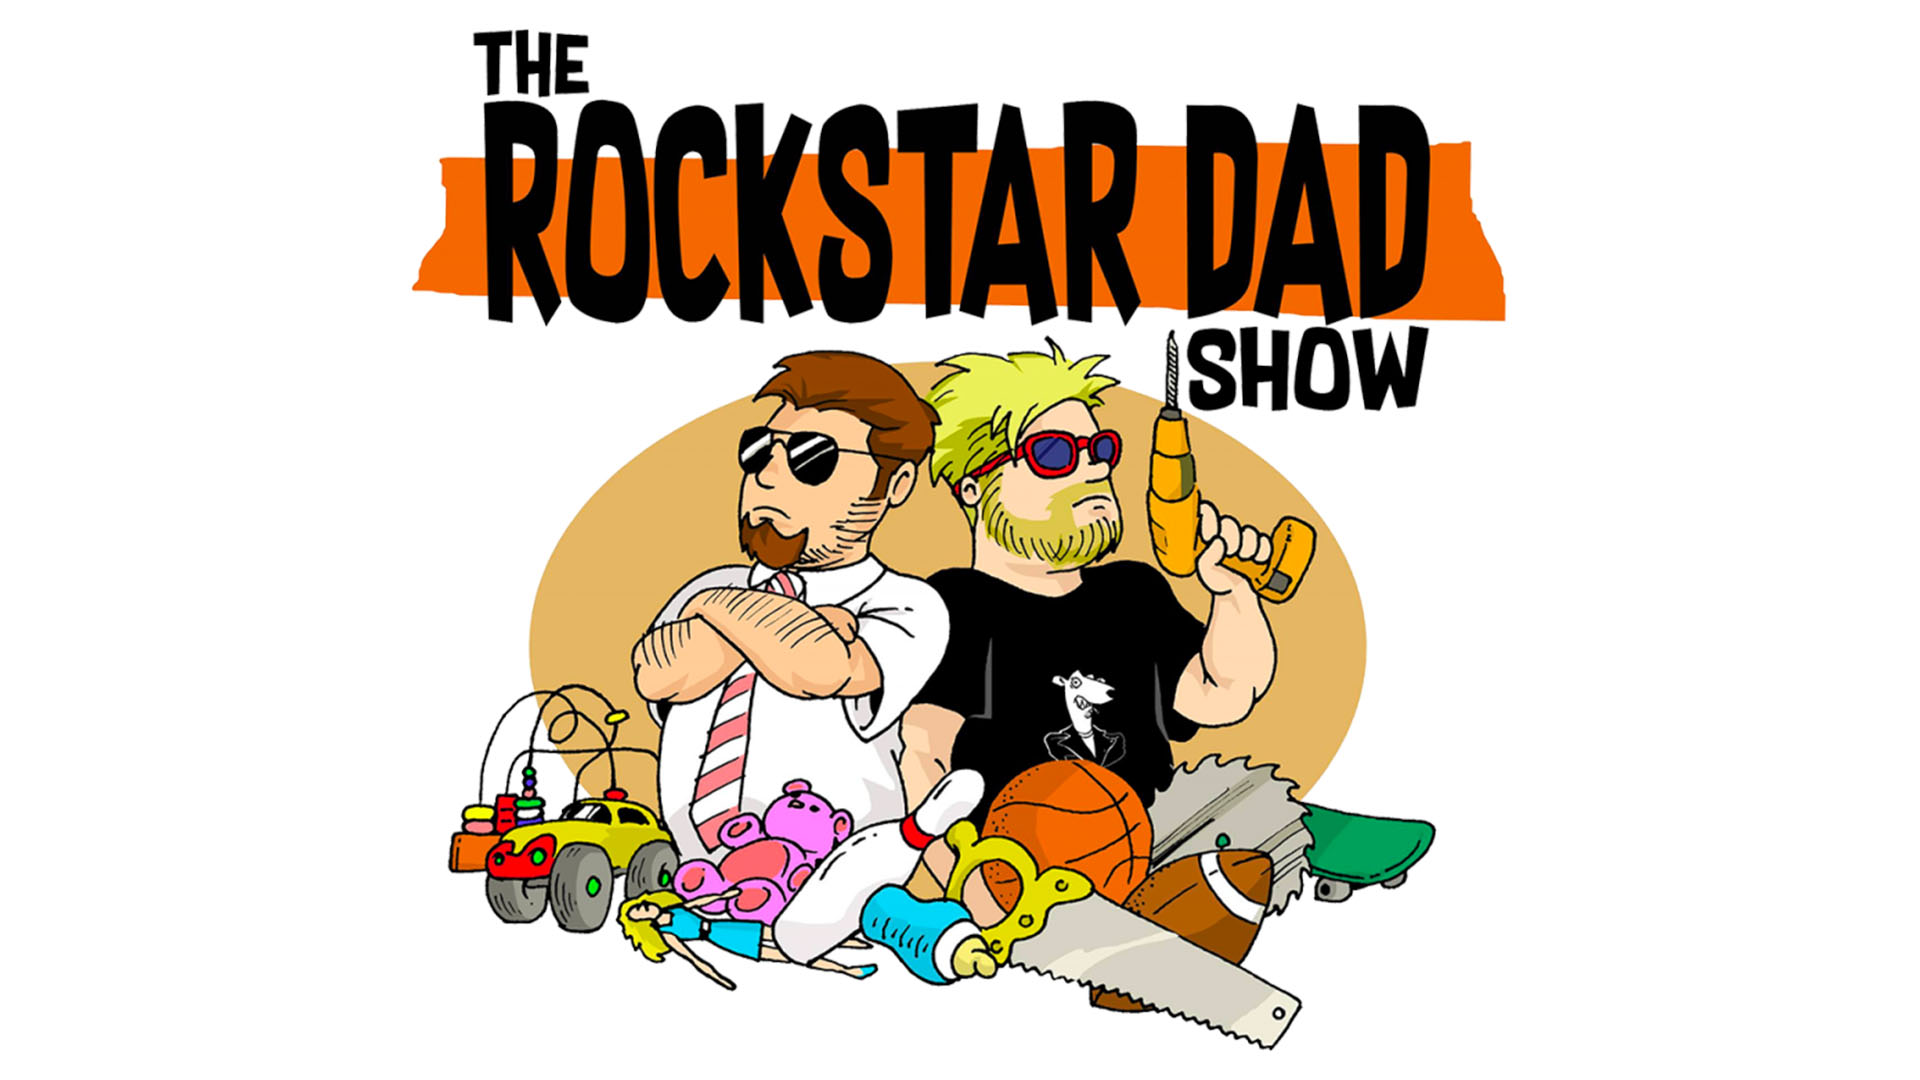 Alan Smyth on The Rockstar Dad Show featured